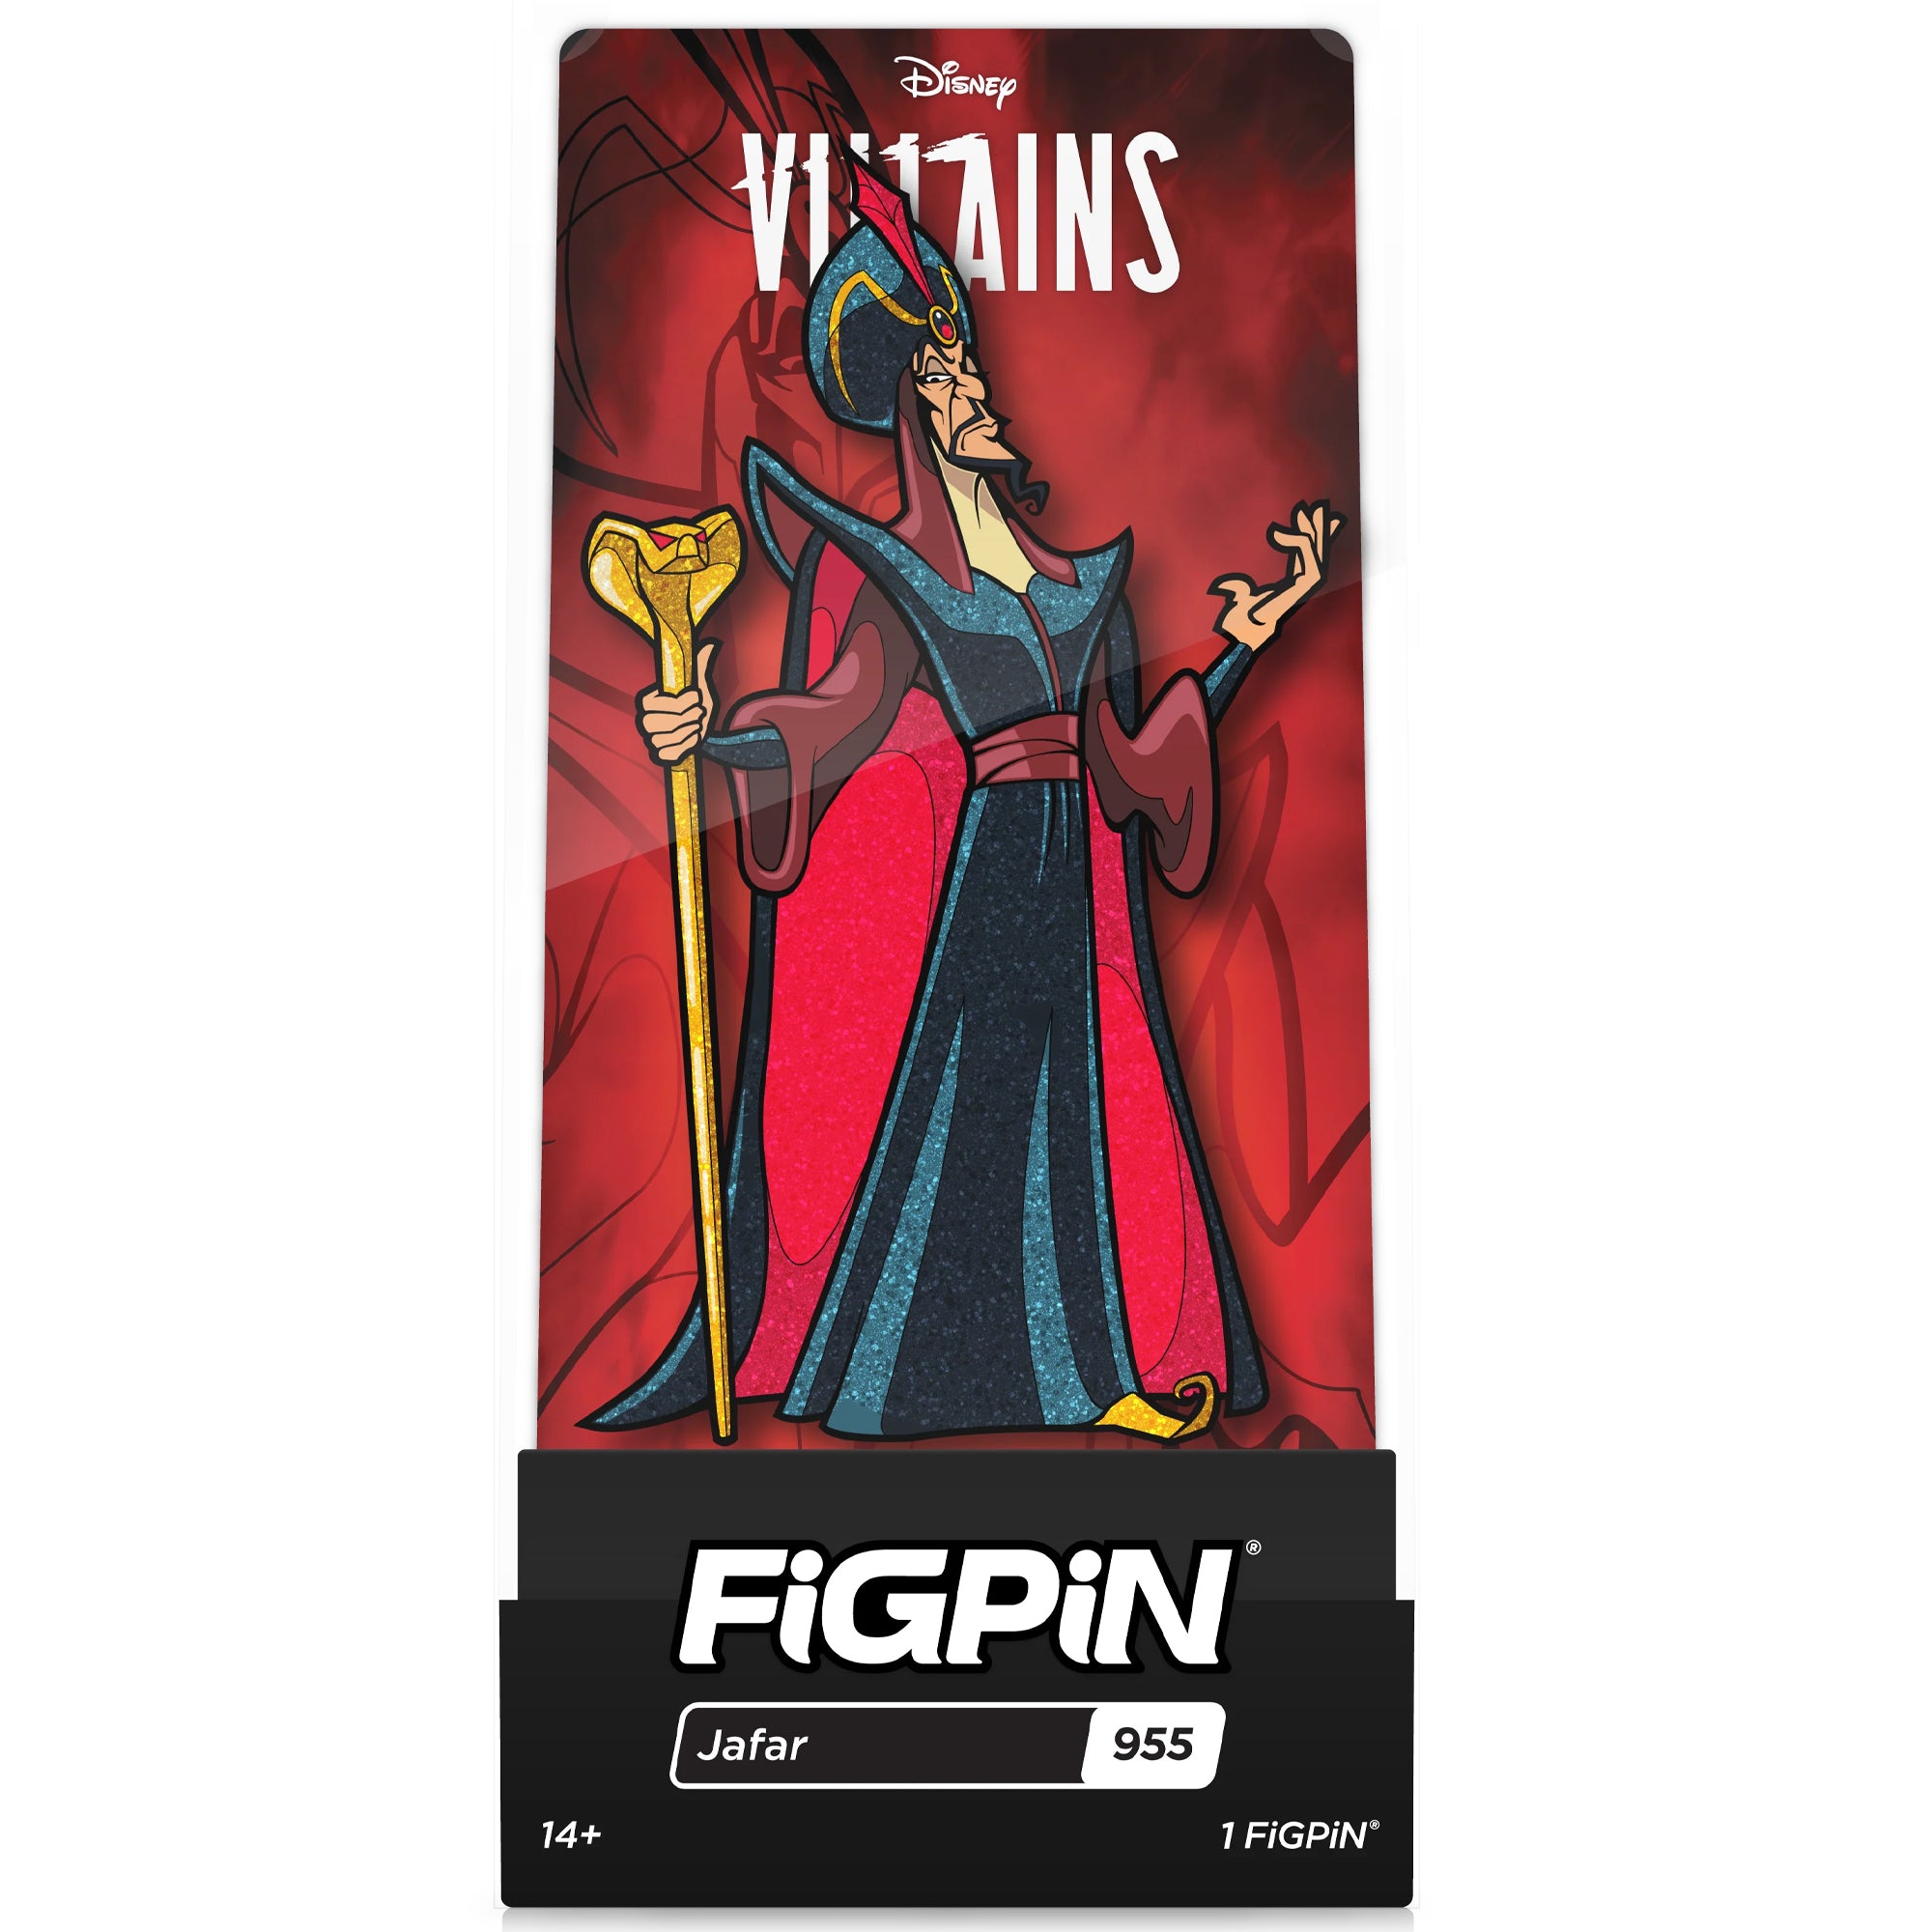 Disney Villains Jafar Limited Edition 3" Collectible Pin #955